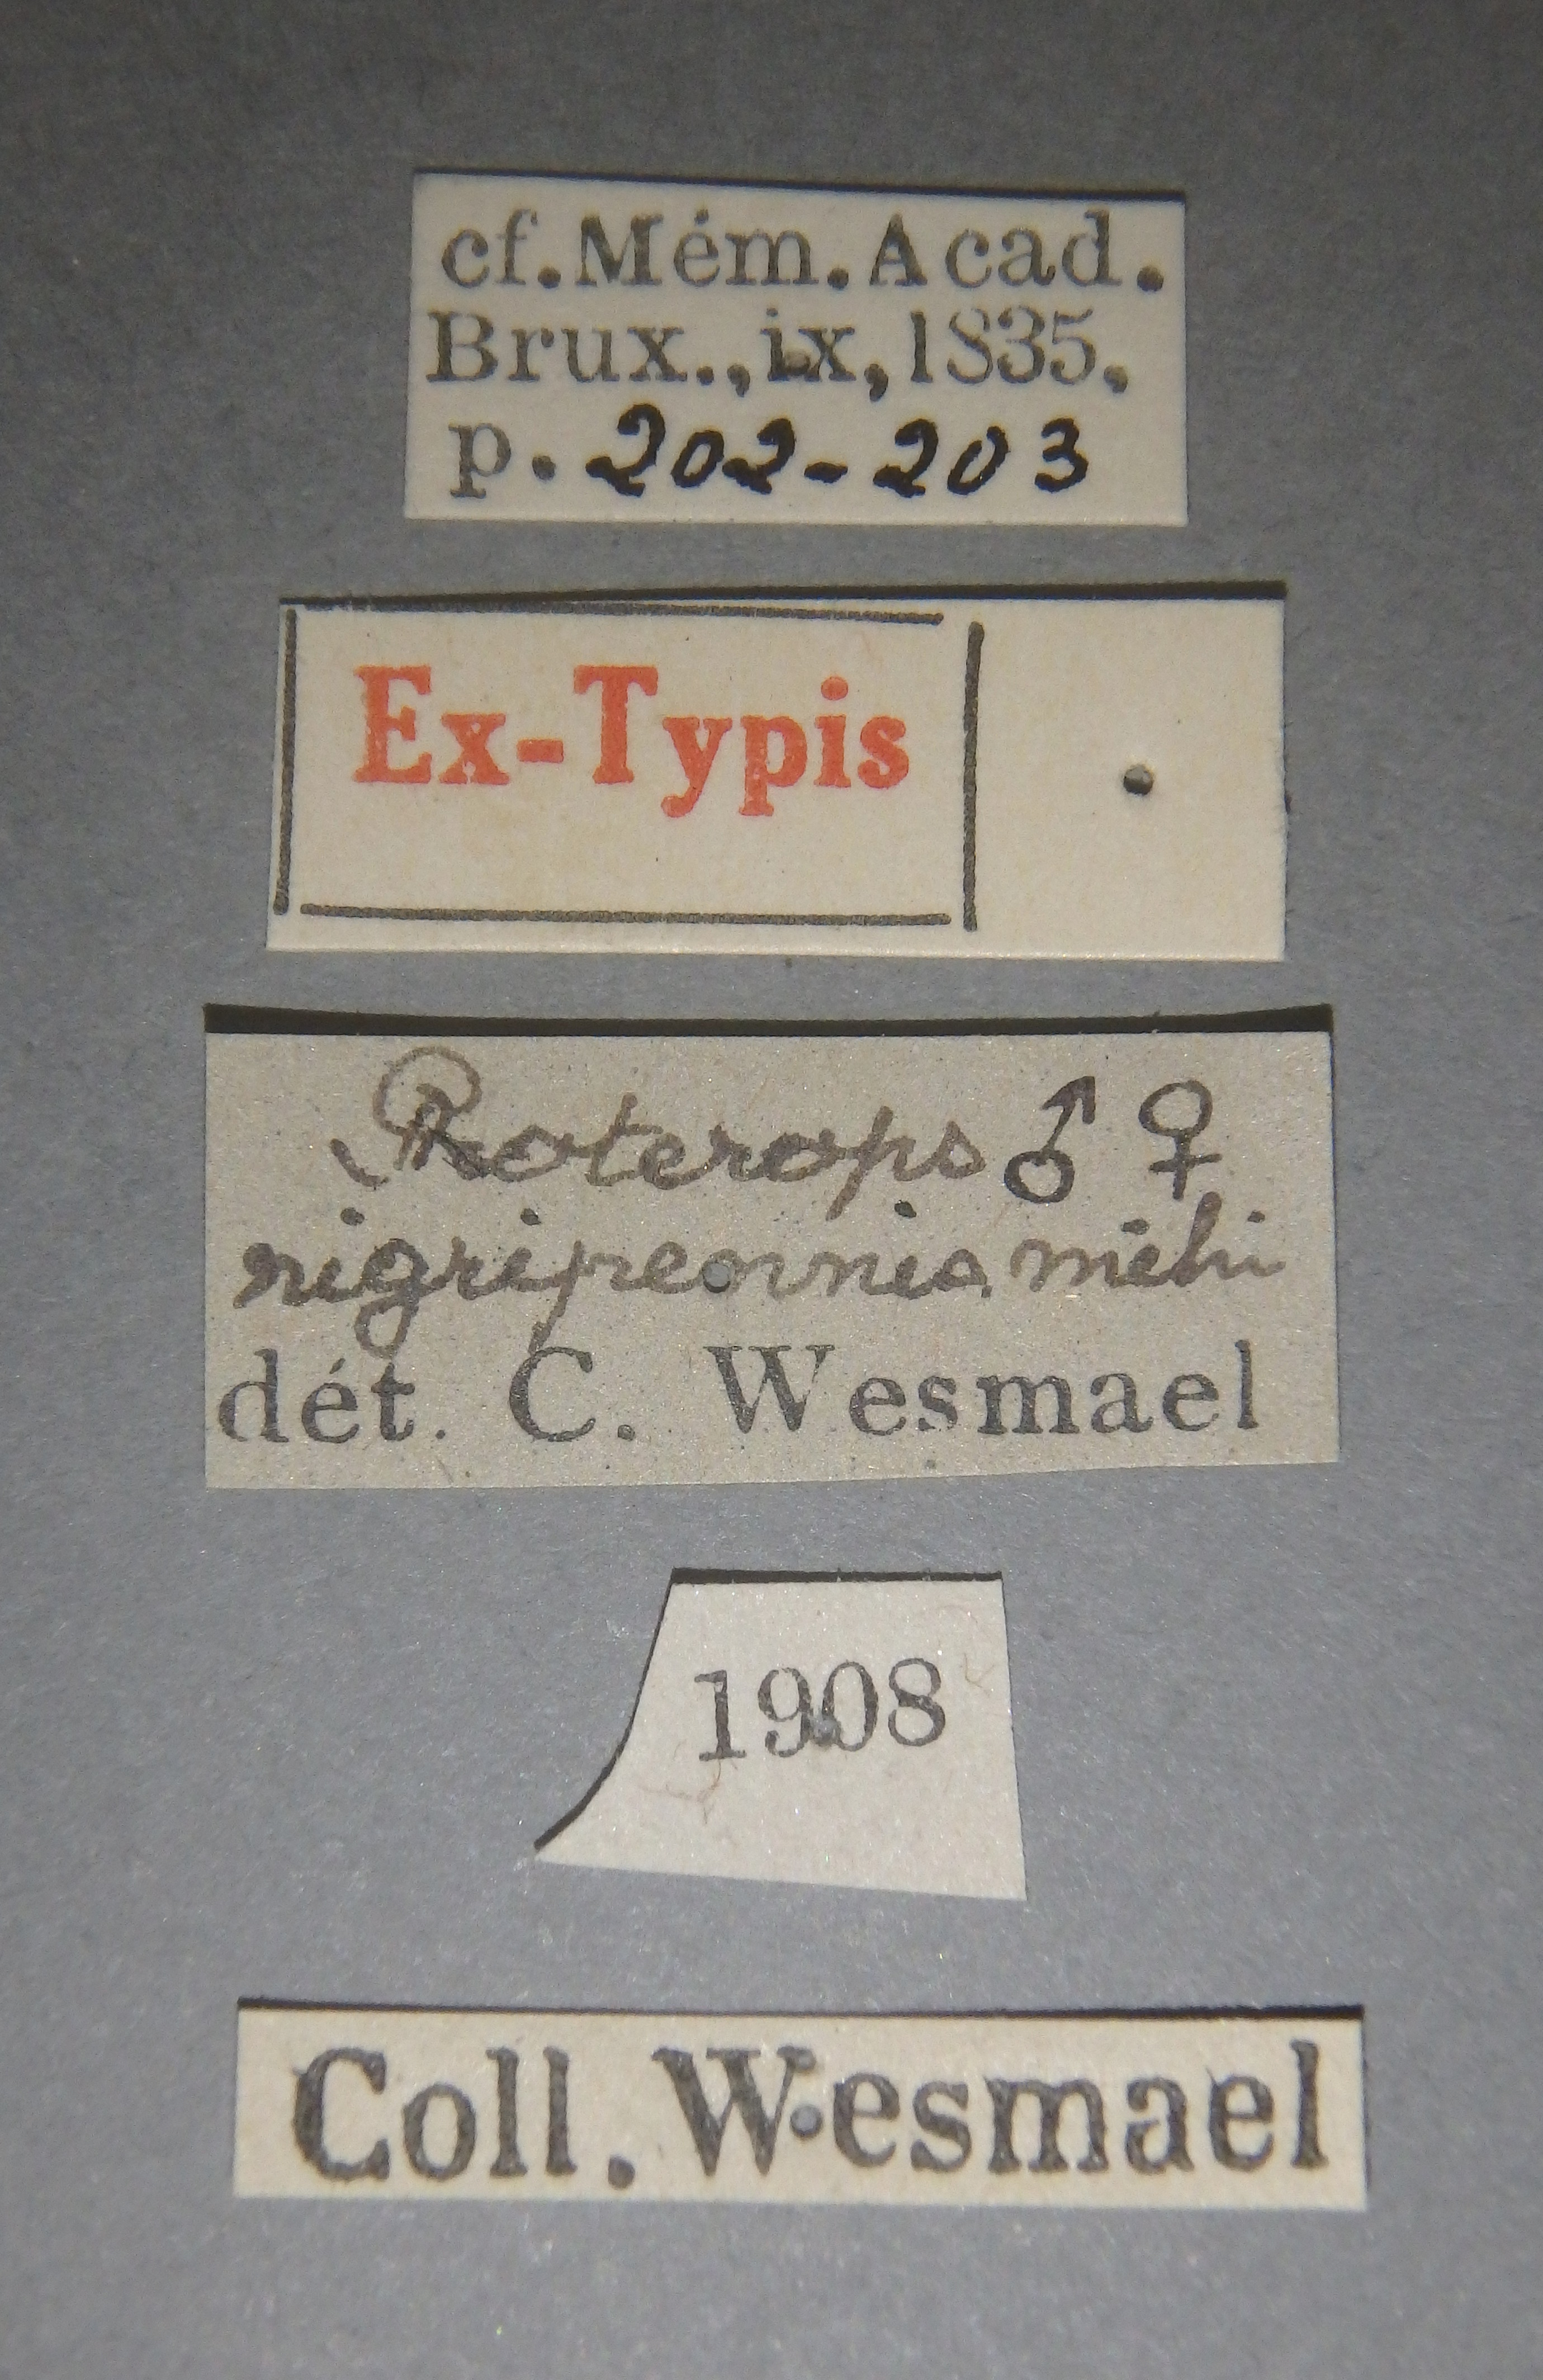 Proterops nigripennis et Lb.jpg